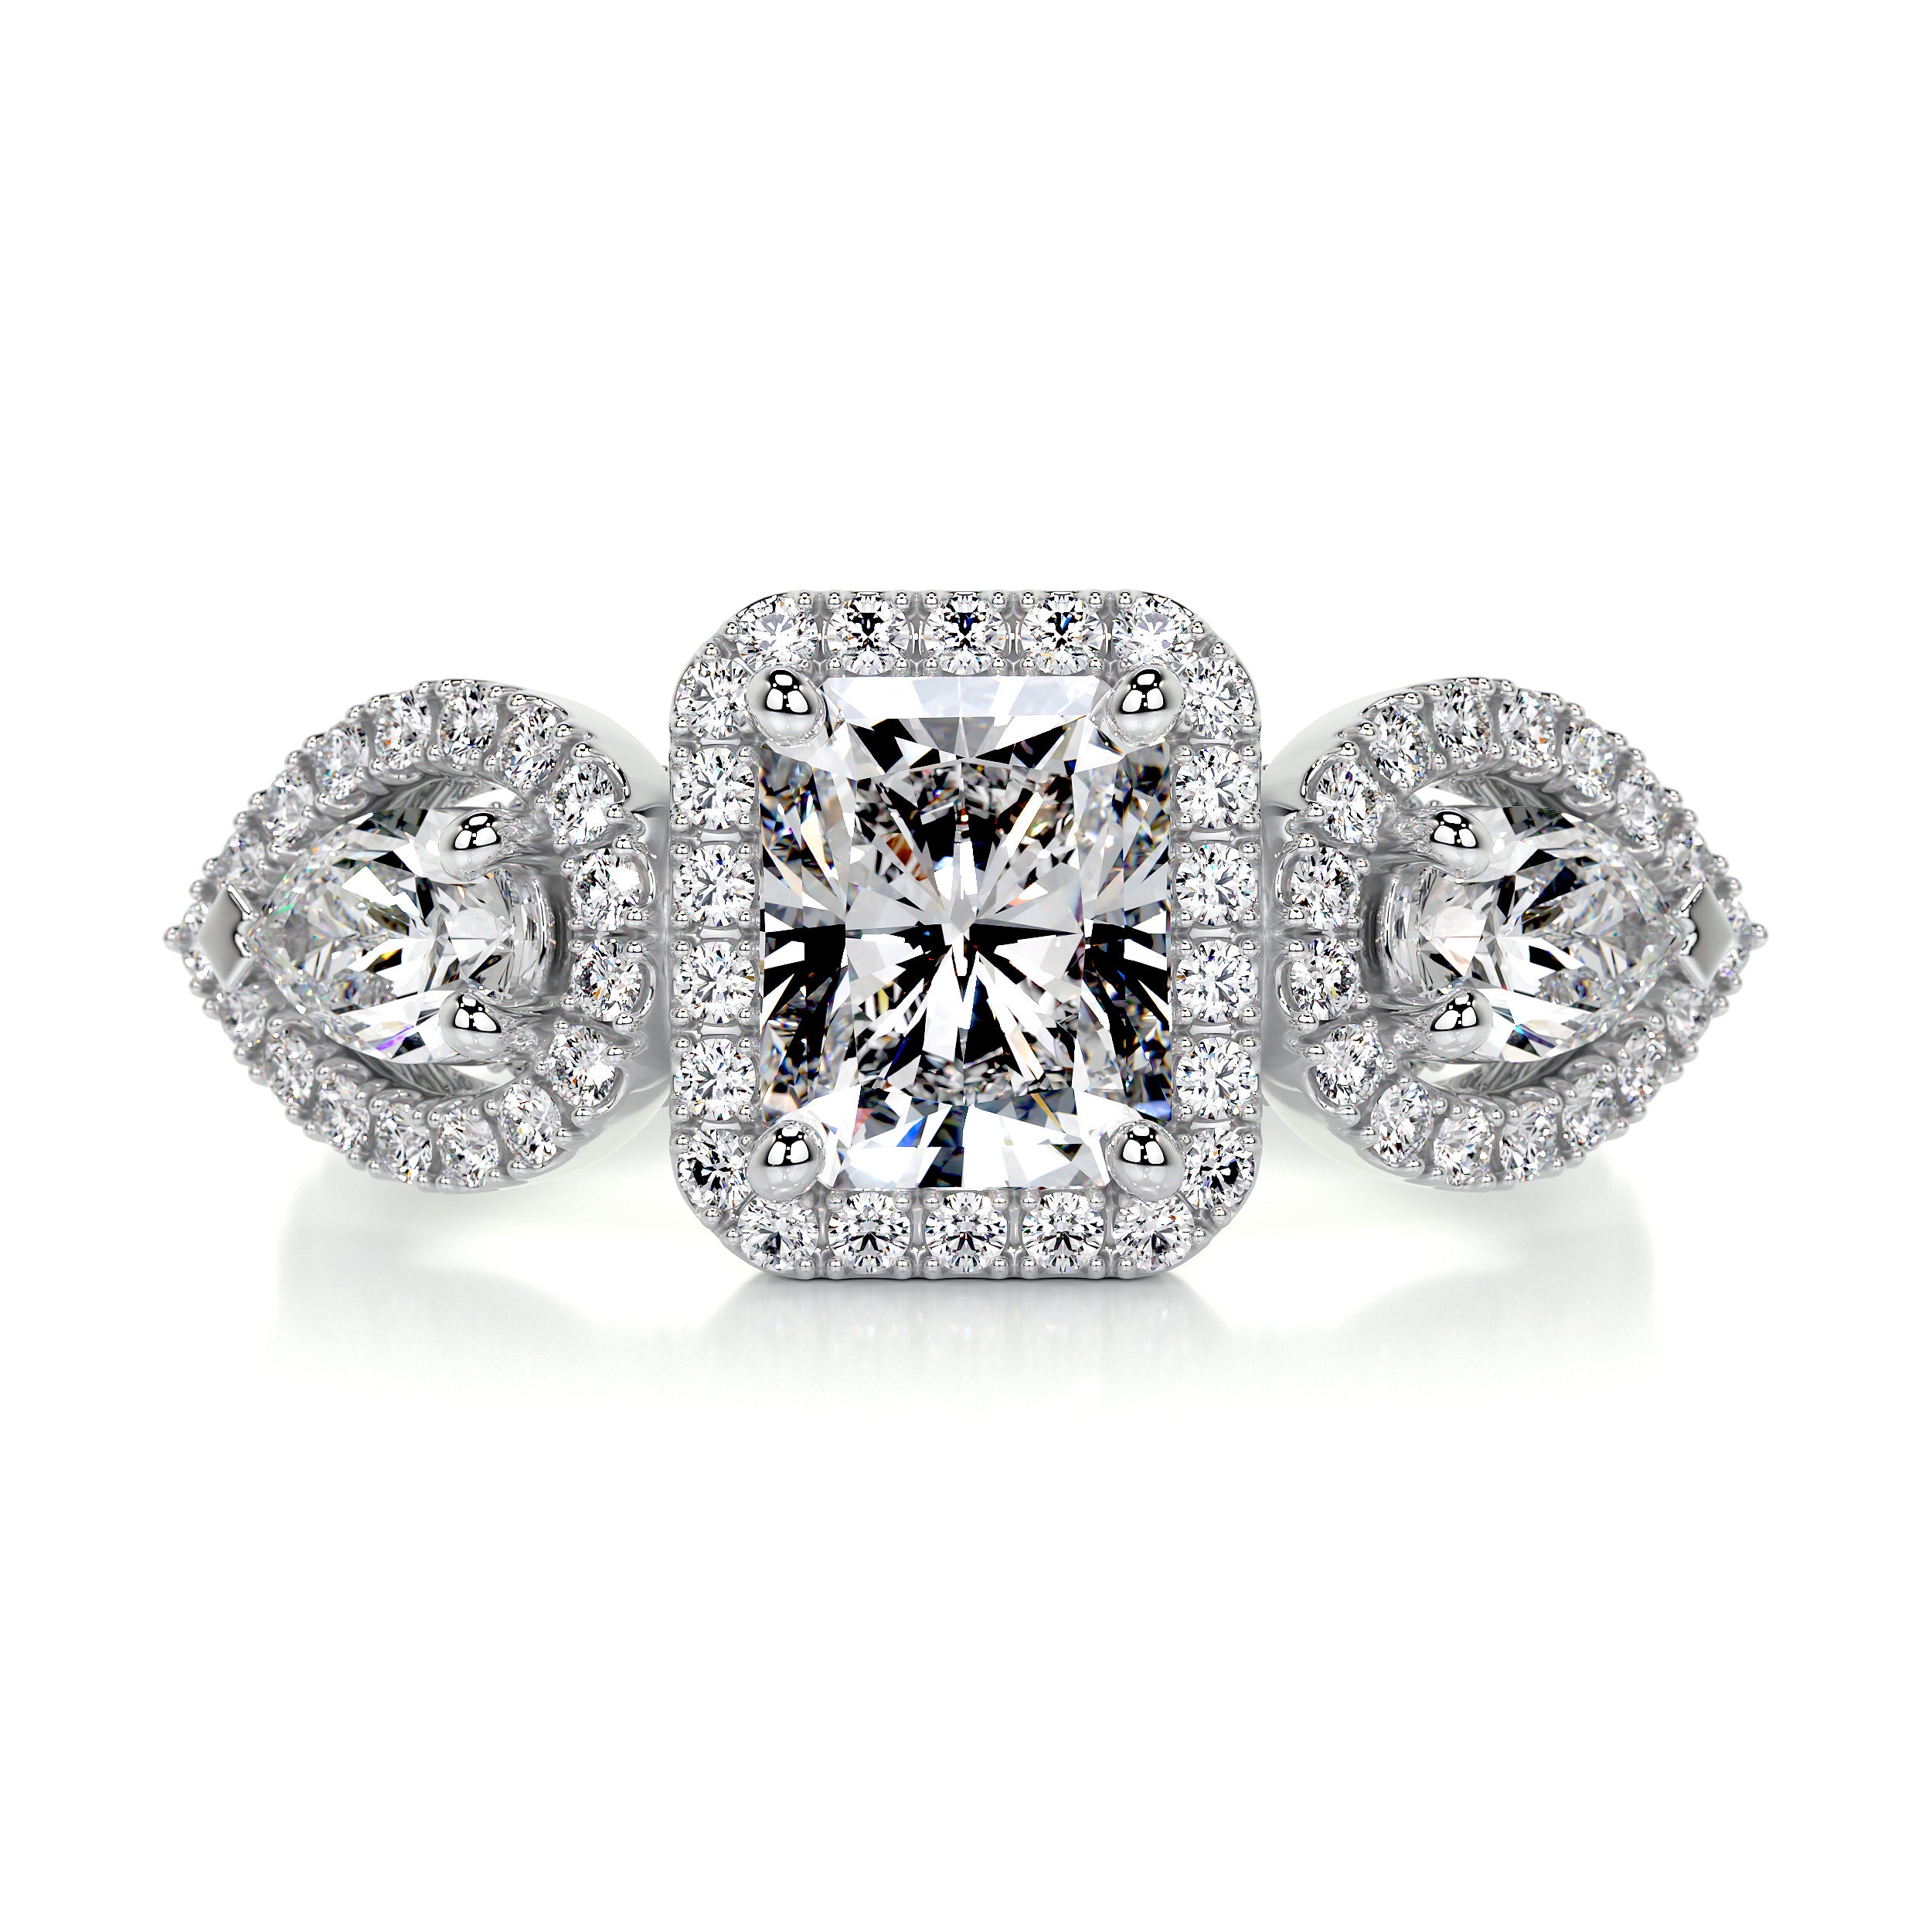 Violet Diamond Engagement Ring   (2.15 Carat) - 18K White Gold